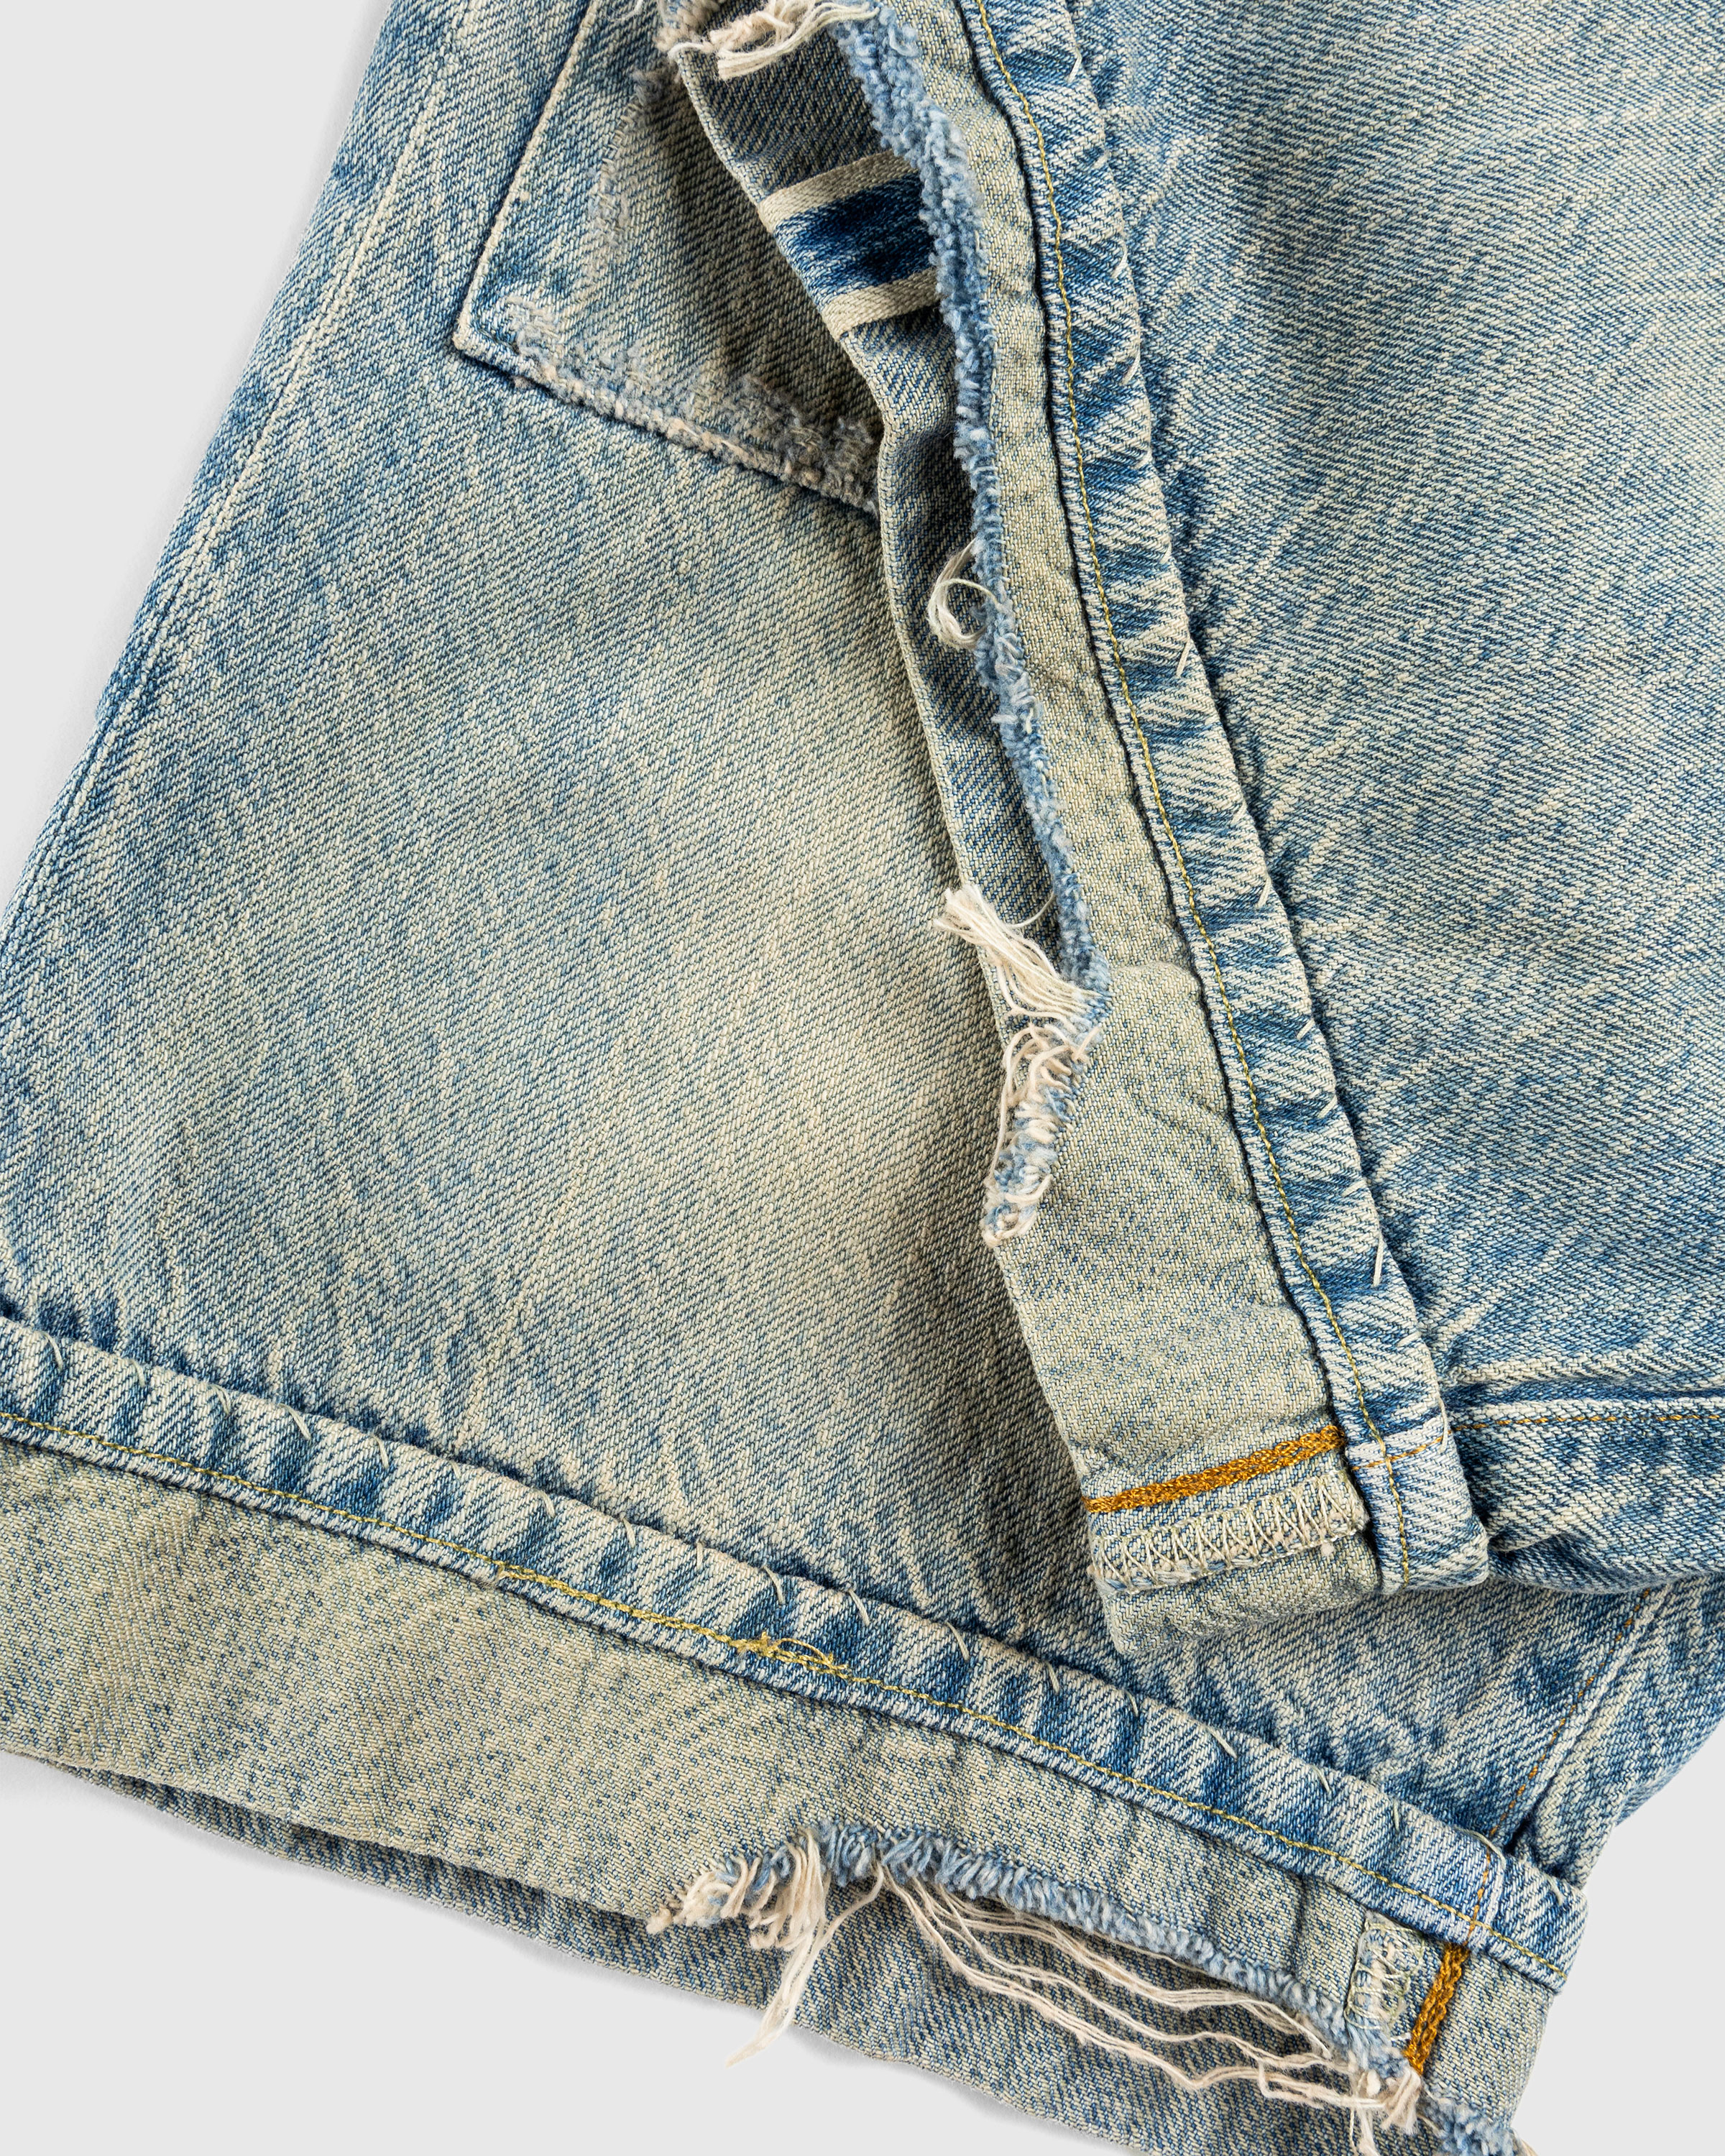 Levi's – 1917 Homer Campbell 501 Jeans Medium Indigo - Denim - Blue - Image 9